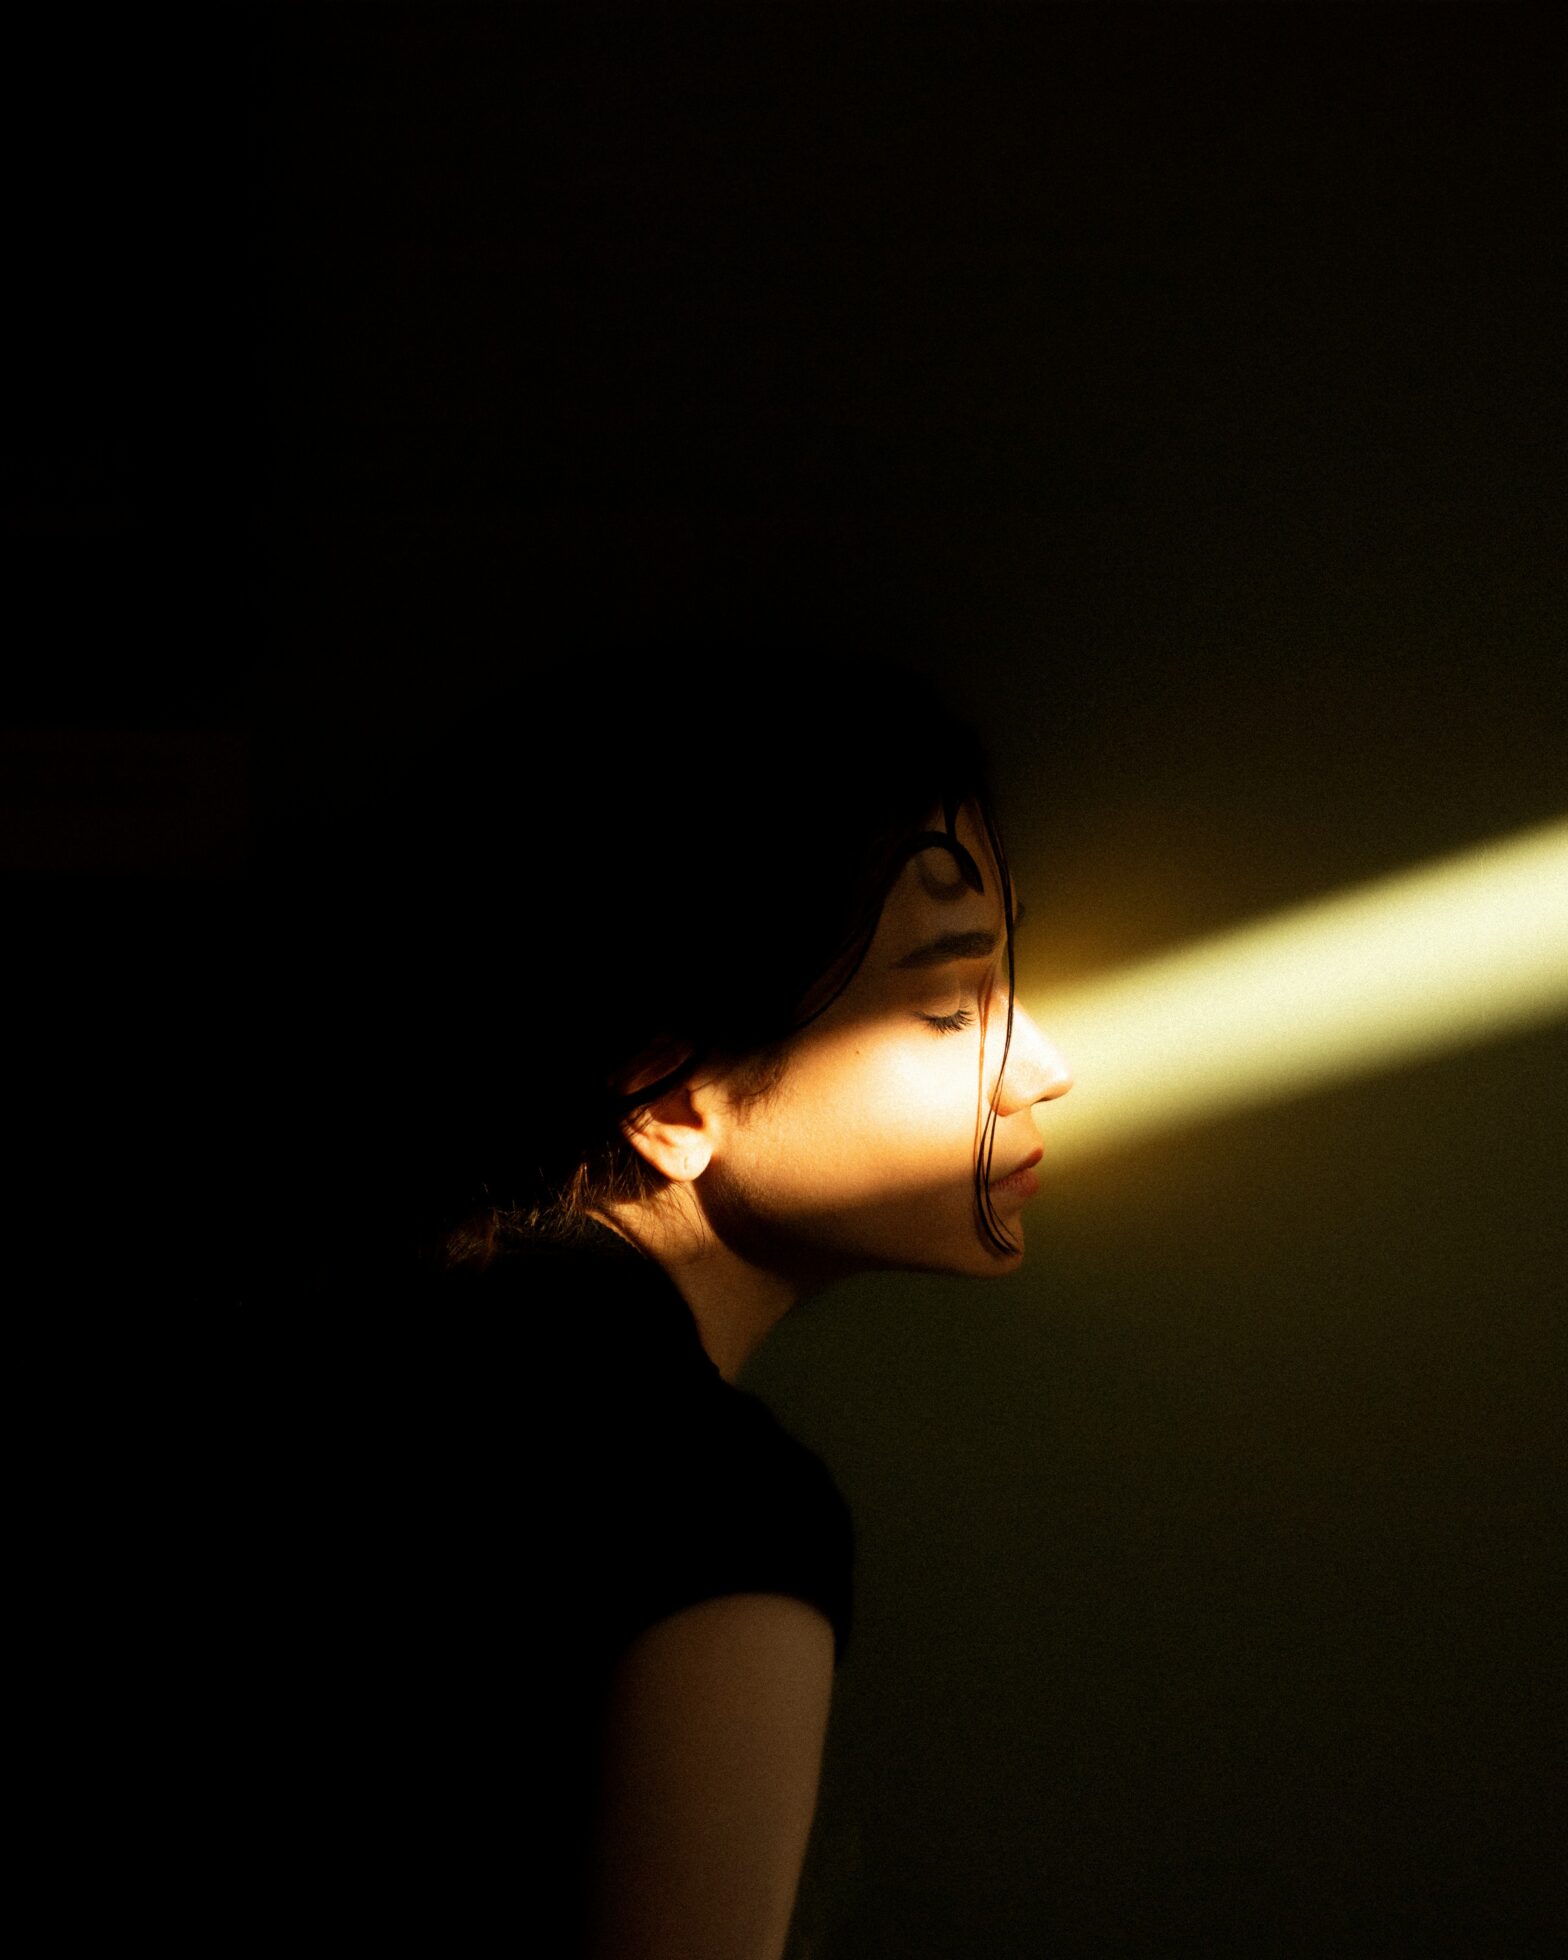 Woman standing in a dark room with a shaft of light illuminating her eyes - Aytam Zaker on https://unsplash.com/photos/a-woman-standing-in-a-dark-room-with-a-light-coming-through-her-eyes-EcdtLQW8JiI Unsplash